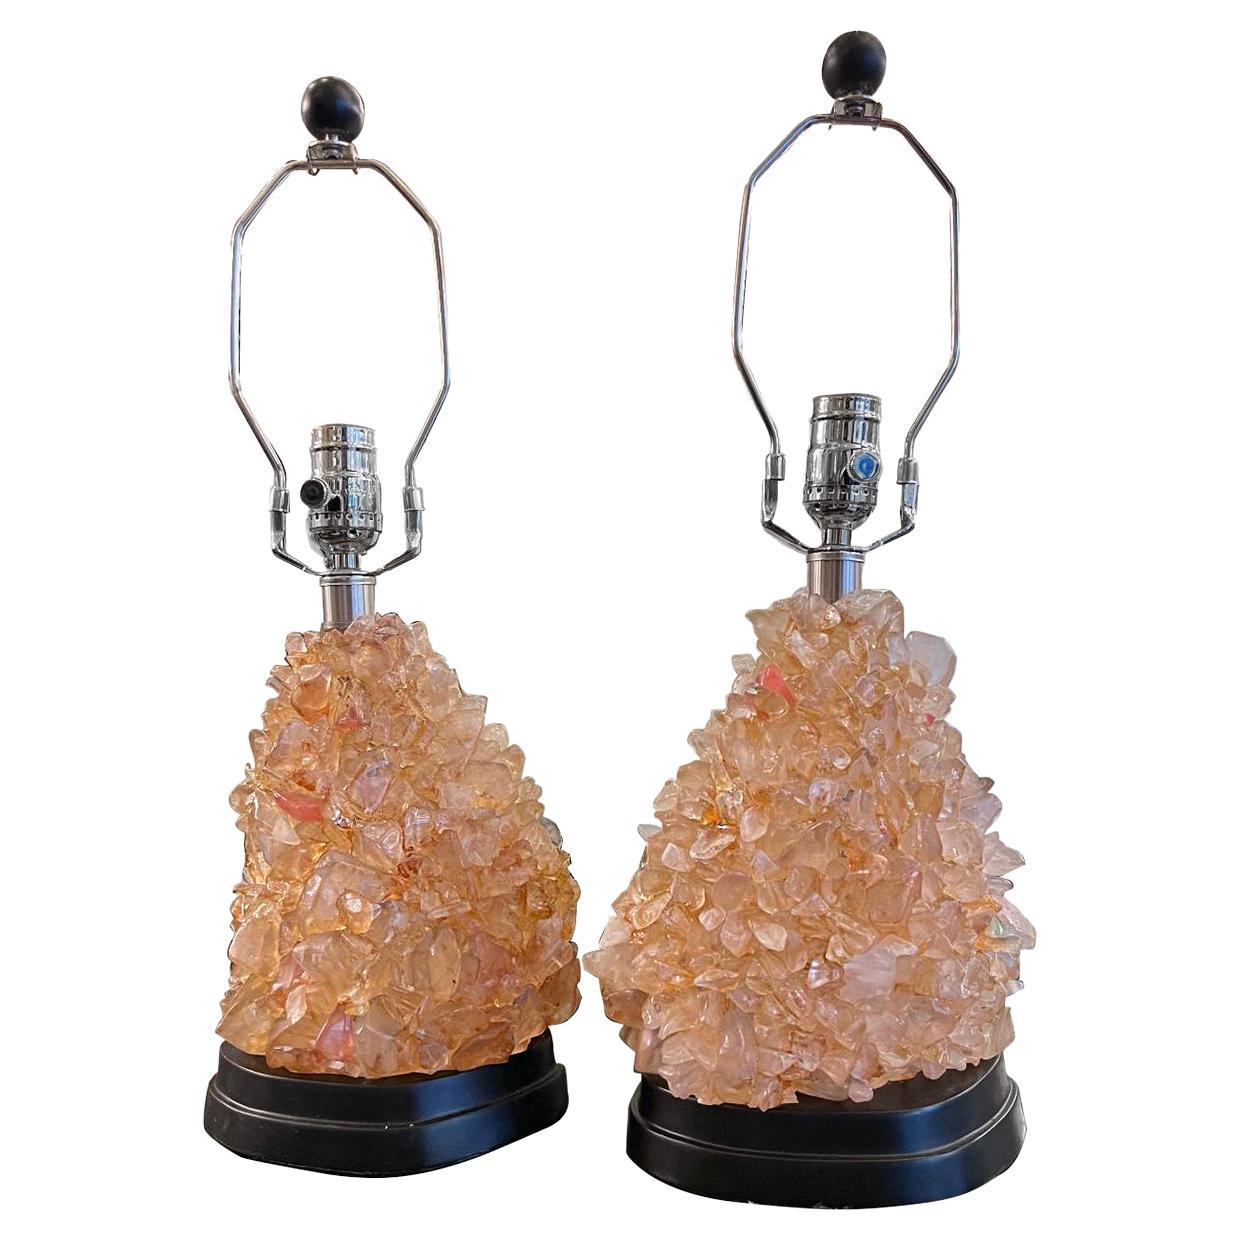 Pair of Midcentury Stone Lamps